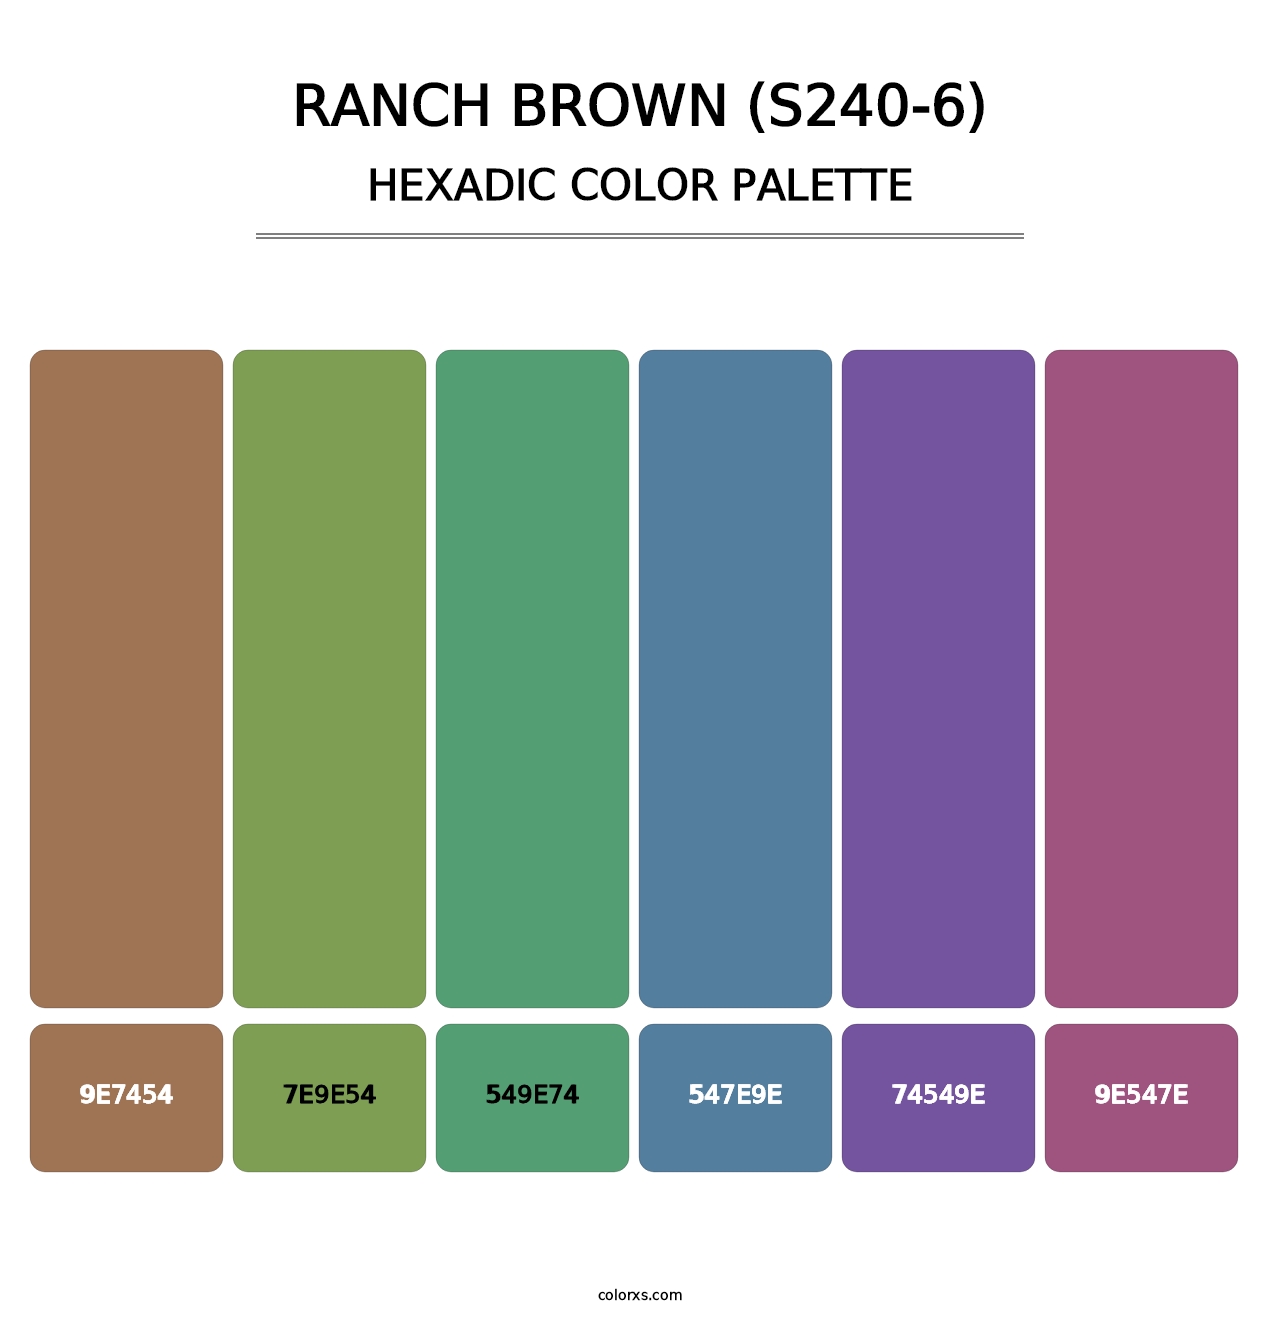 Ranch Brown (S240-6) - Hexadic Color Palette